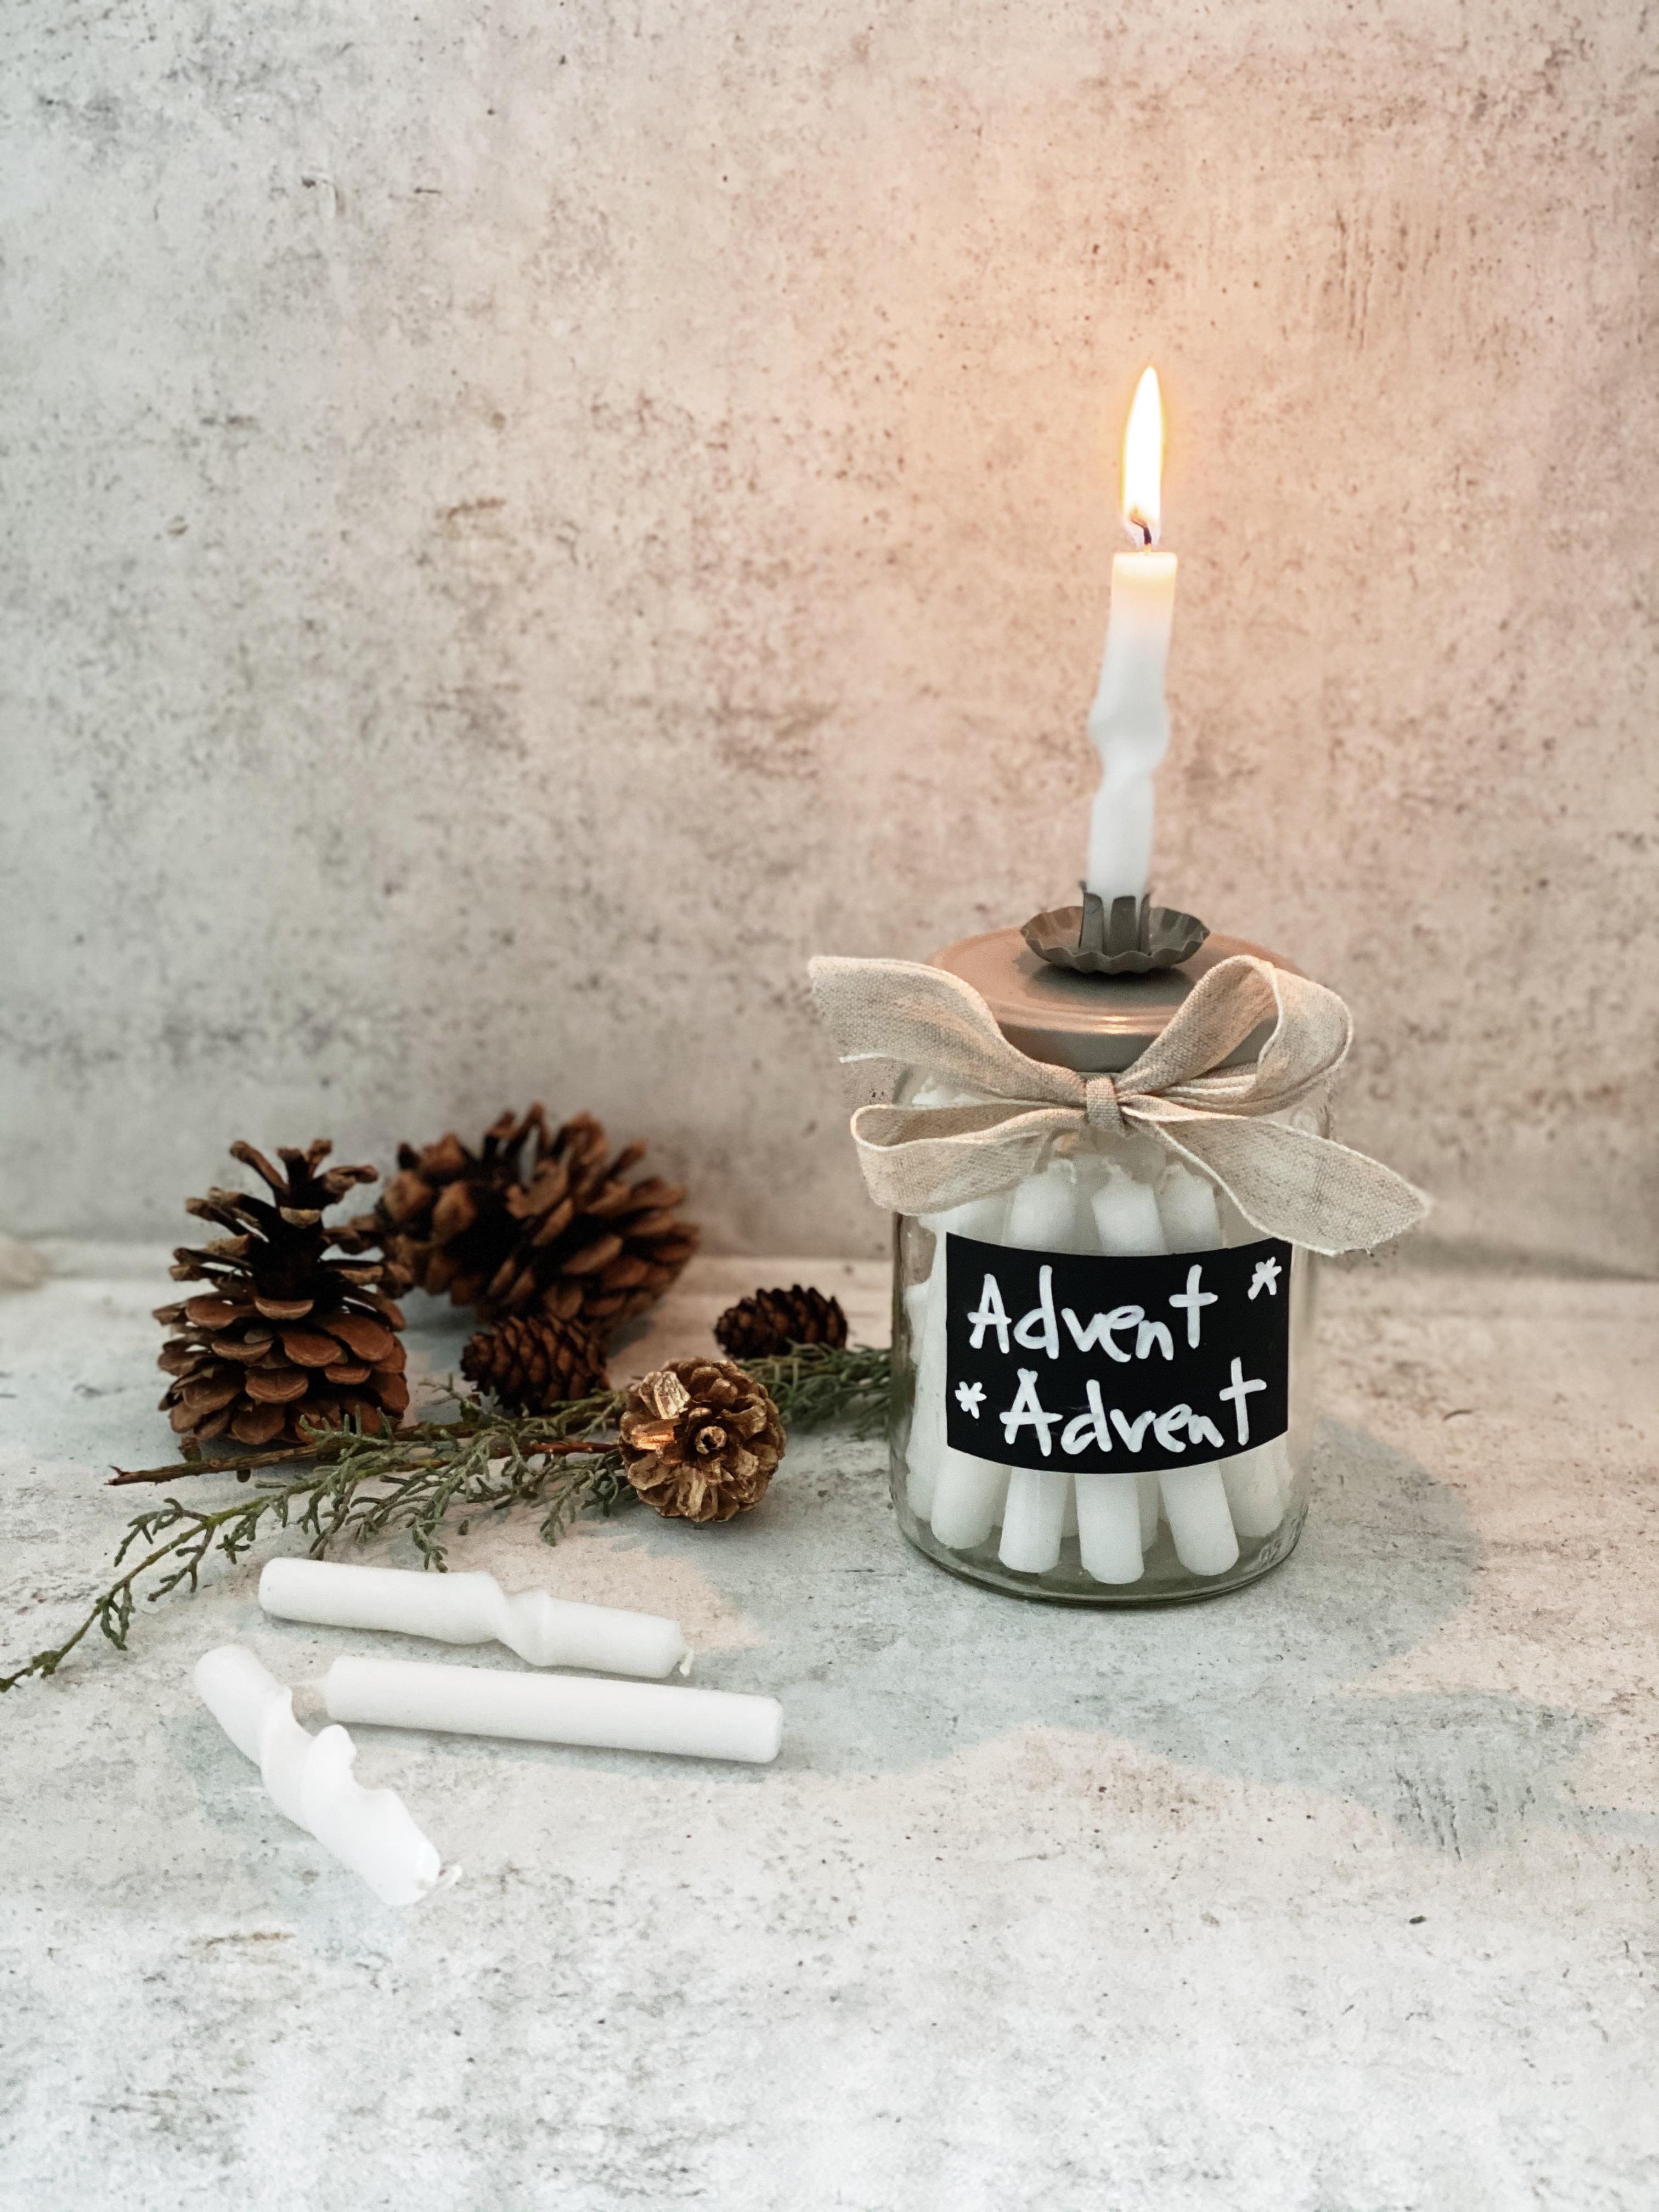 DIY Kerzen Adventskalender 🌟🌟🌟
mit 24 Mini Kerzen #diy #adventskalender #kerzen #advent #Weihnachtsdeko #adventsdeko 